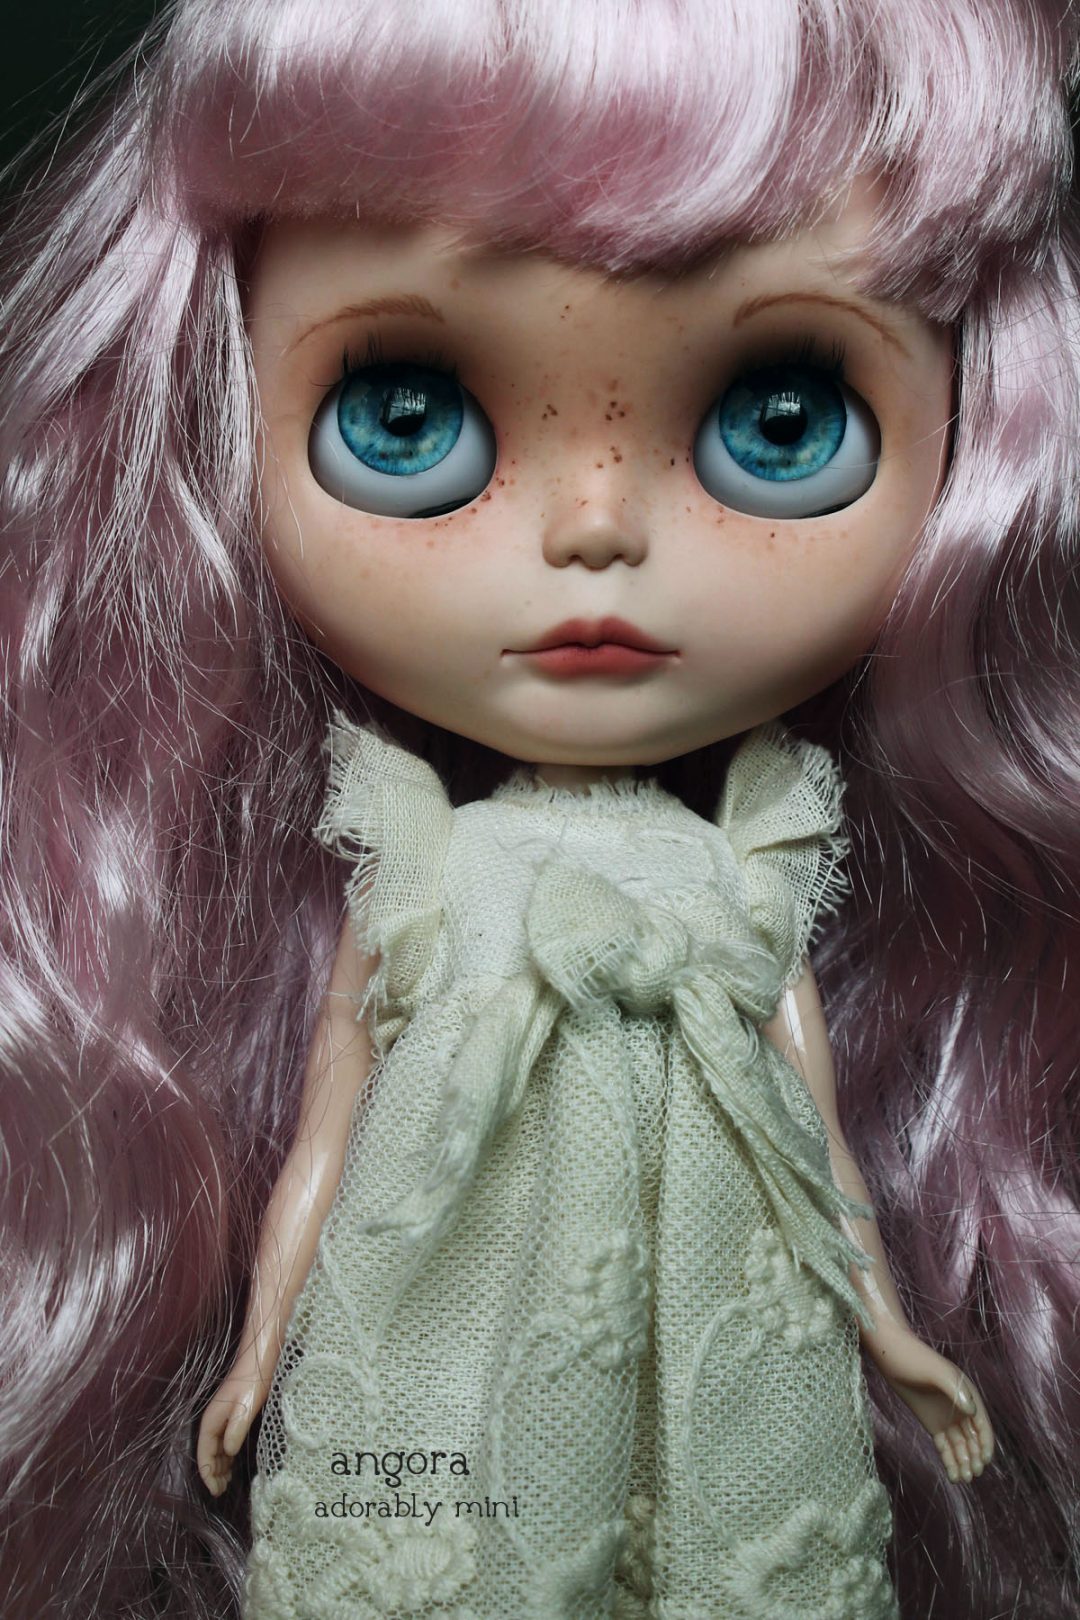 Custom Blythe Doll #26: Angora | AdorablyMini